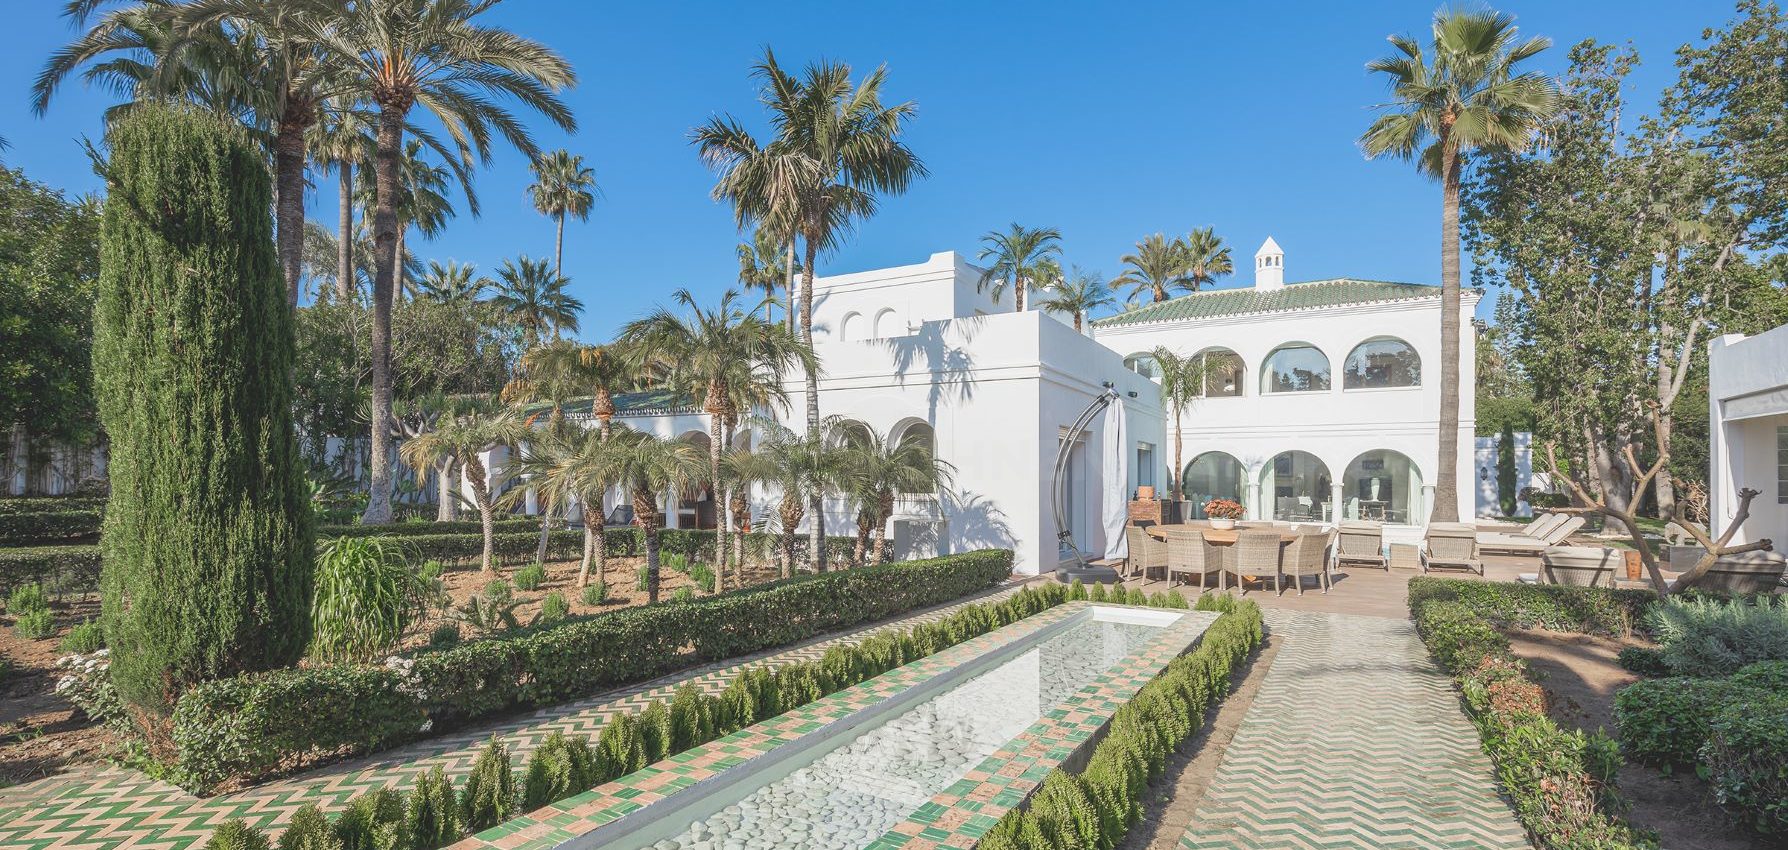 Exquisite Andalusian – Moorish-inspired luxury villa